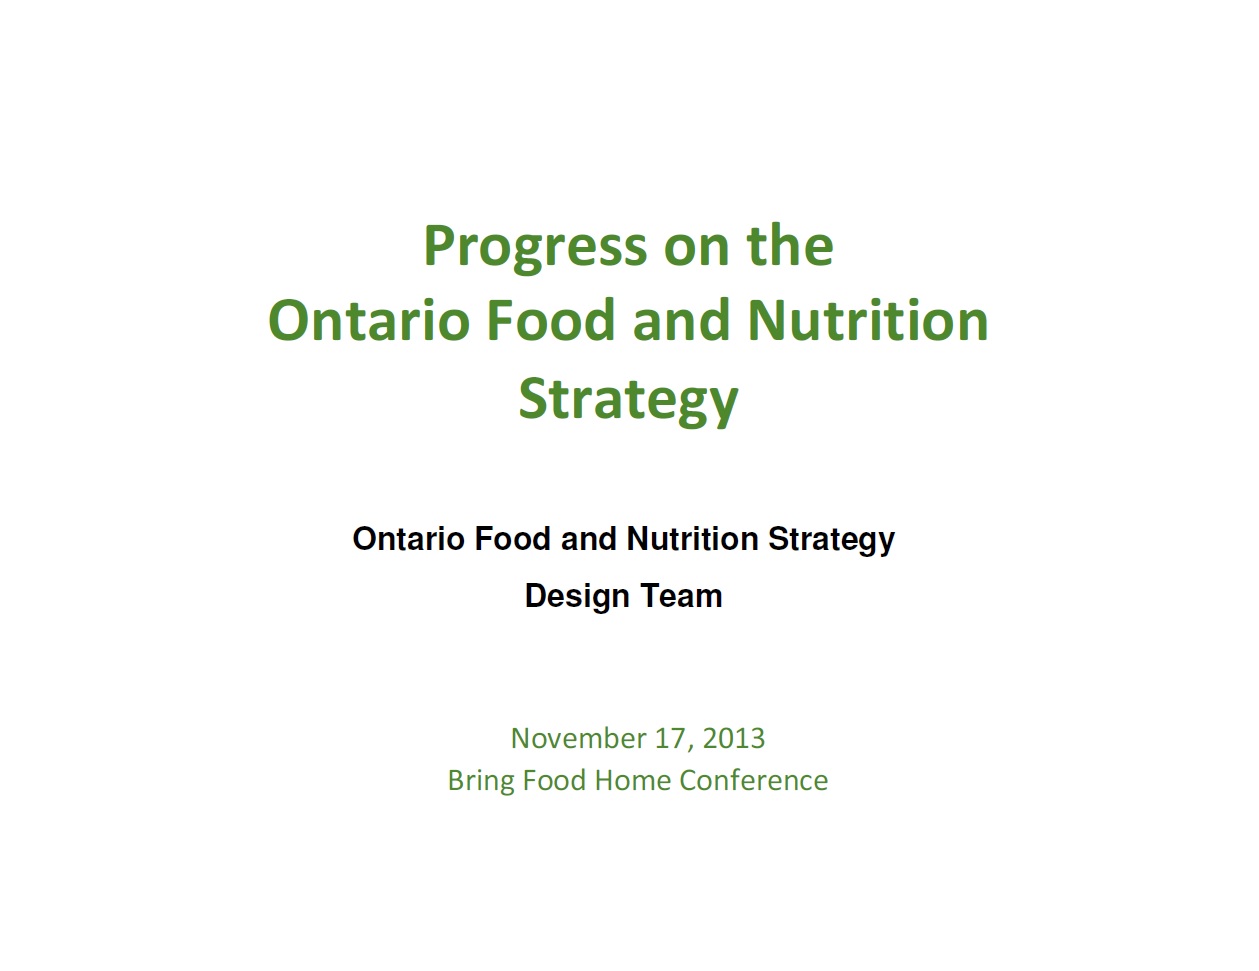 BFH Nutrition Strategy